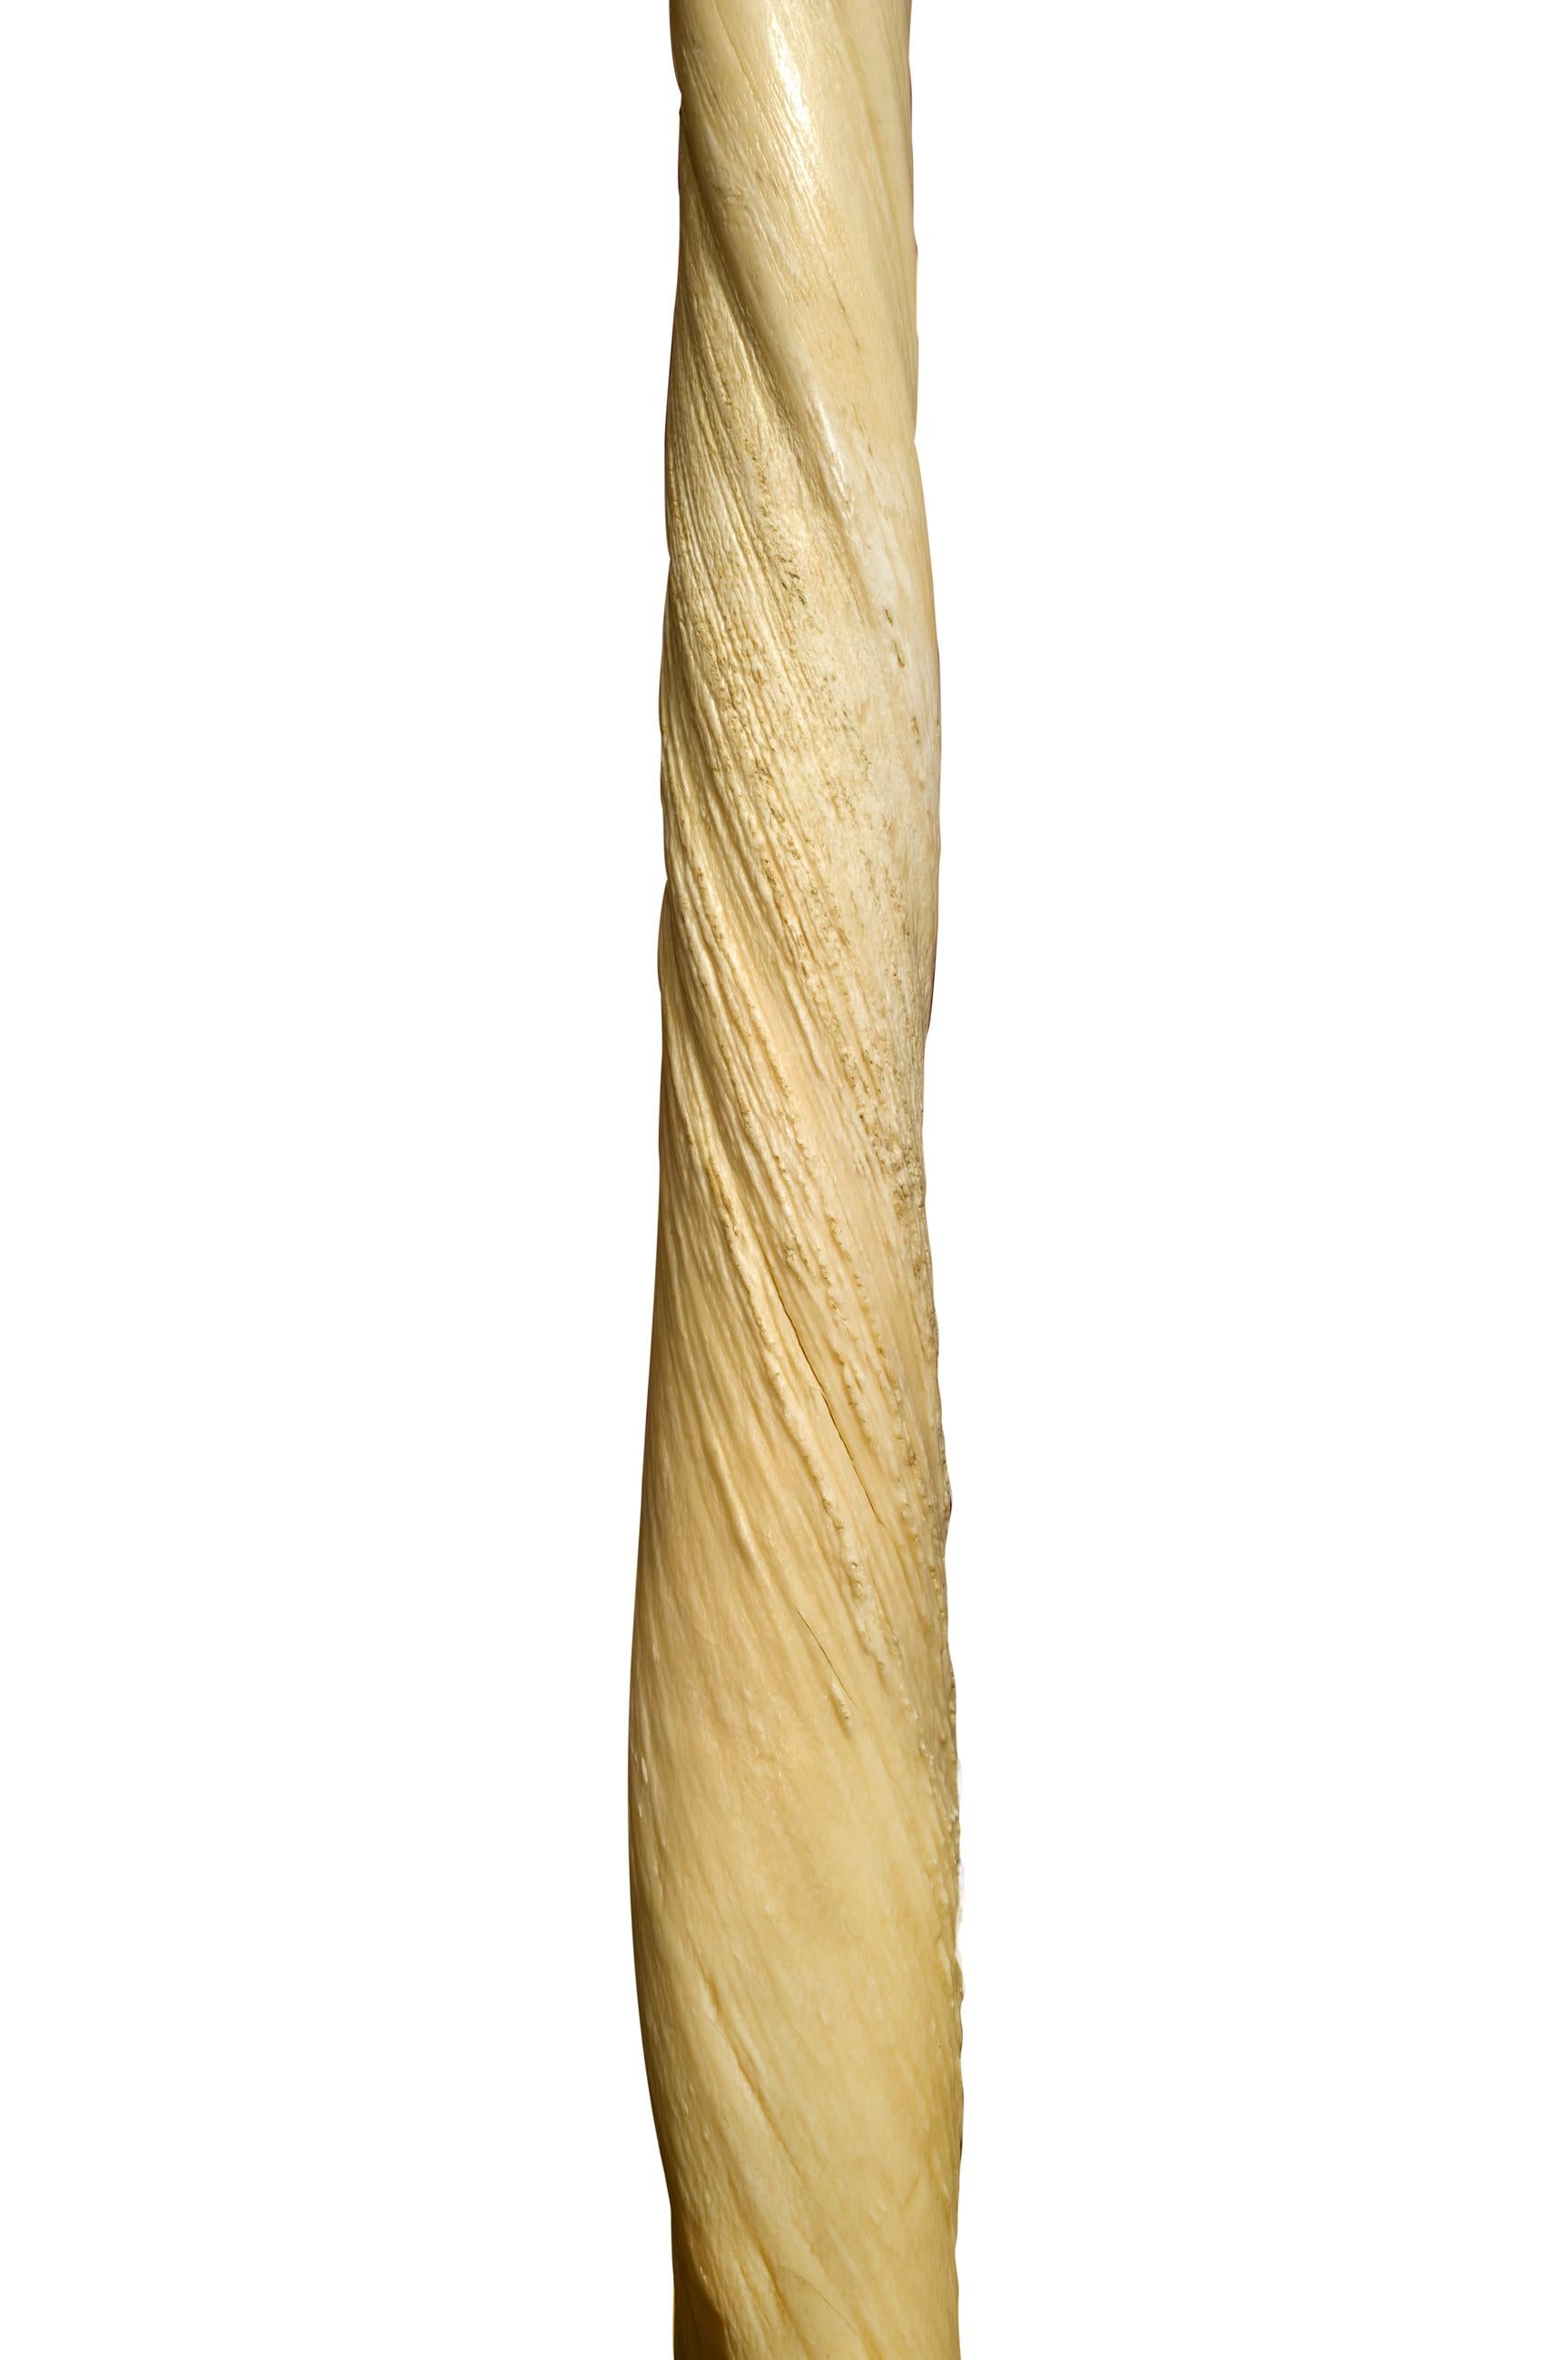 narwhal tusk for sale ebay